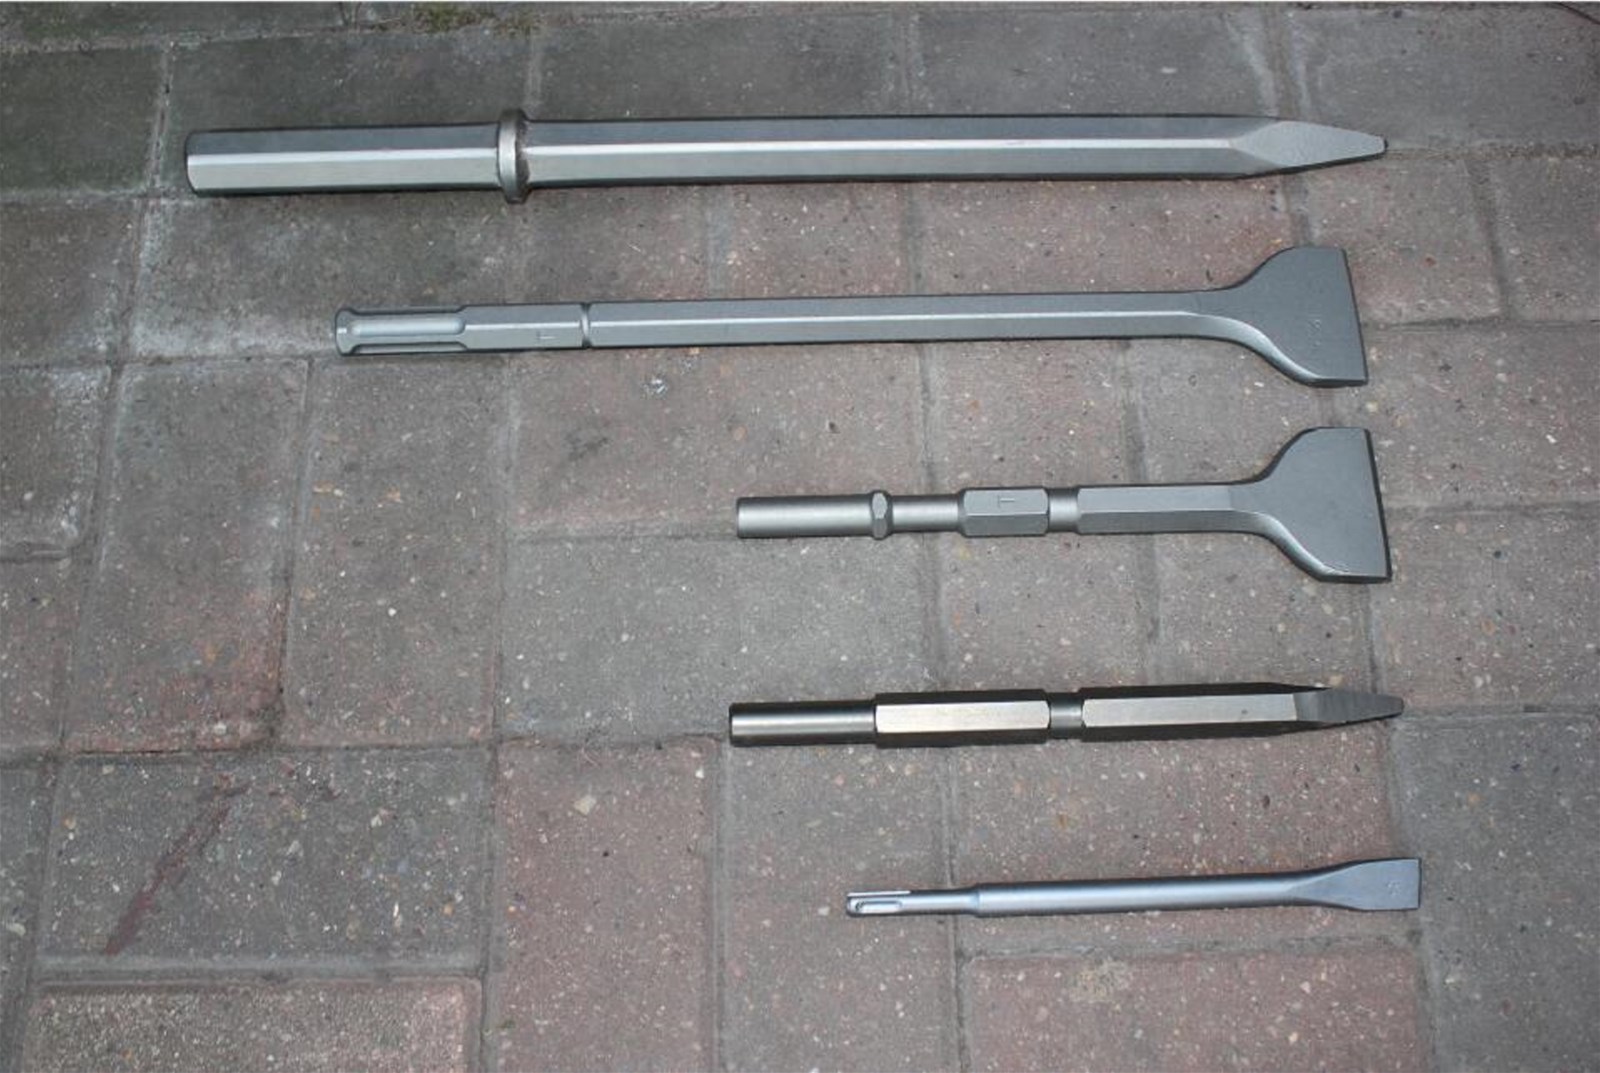 Standard paving breaker toolshand toolselectric hammer drill bits